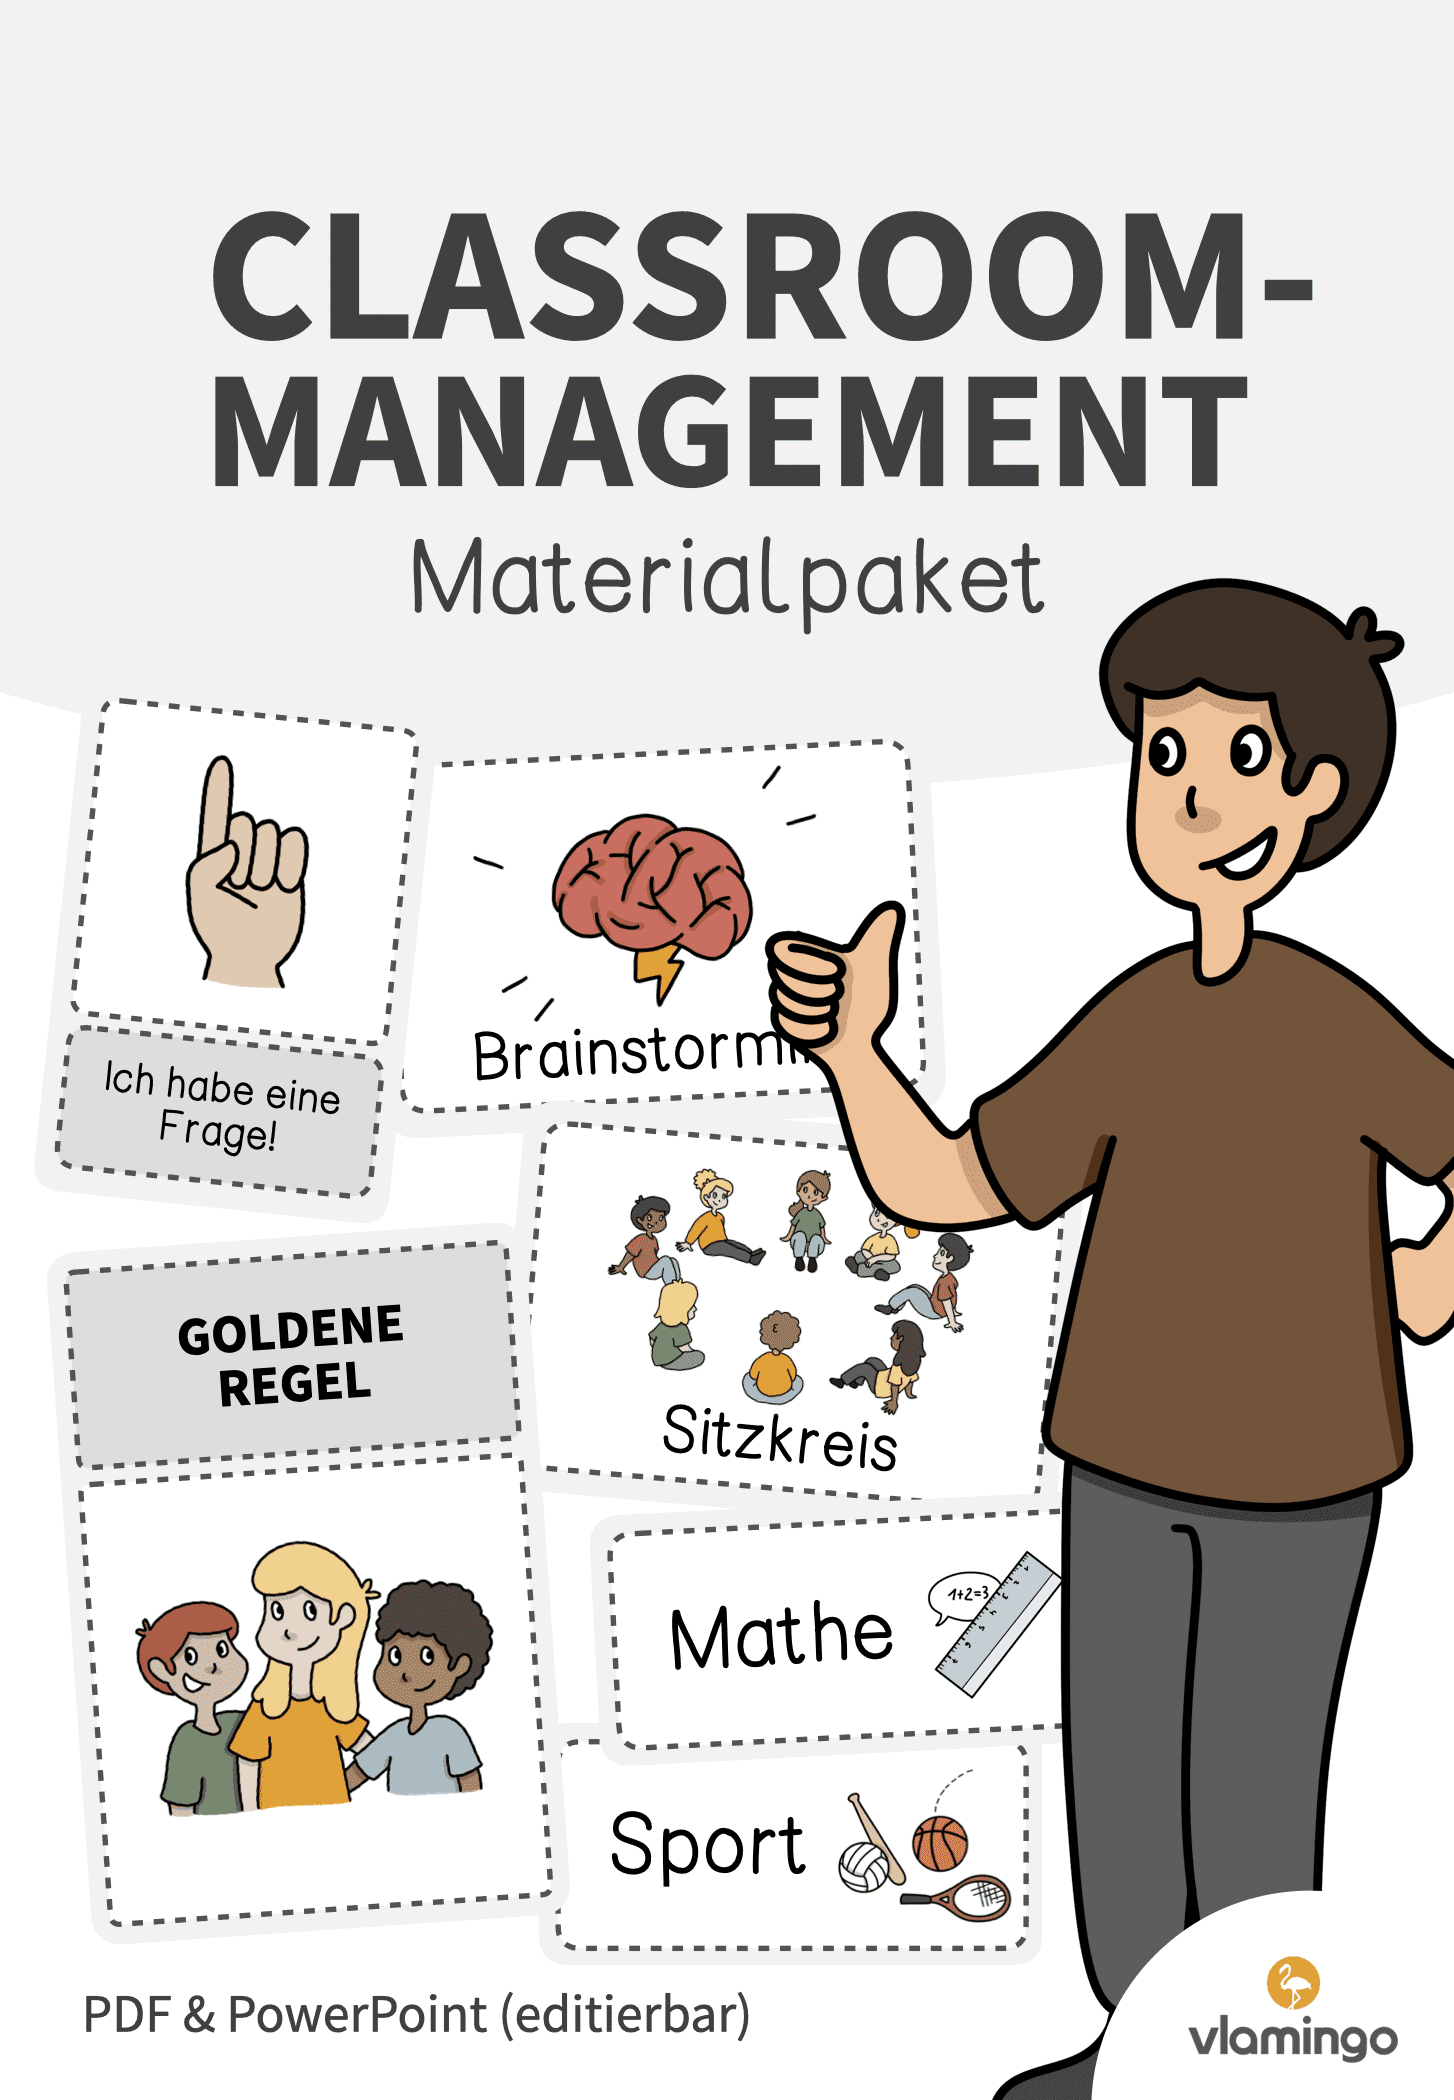 Classroom-Management - Material